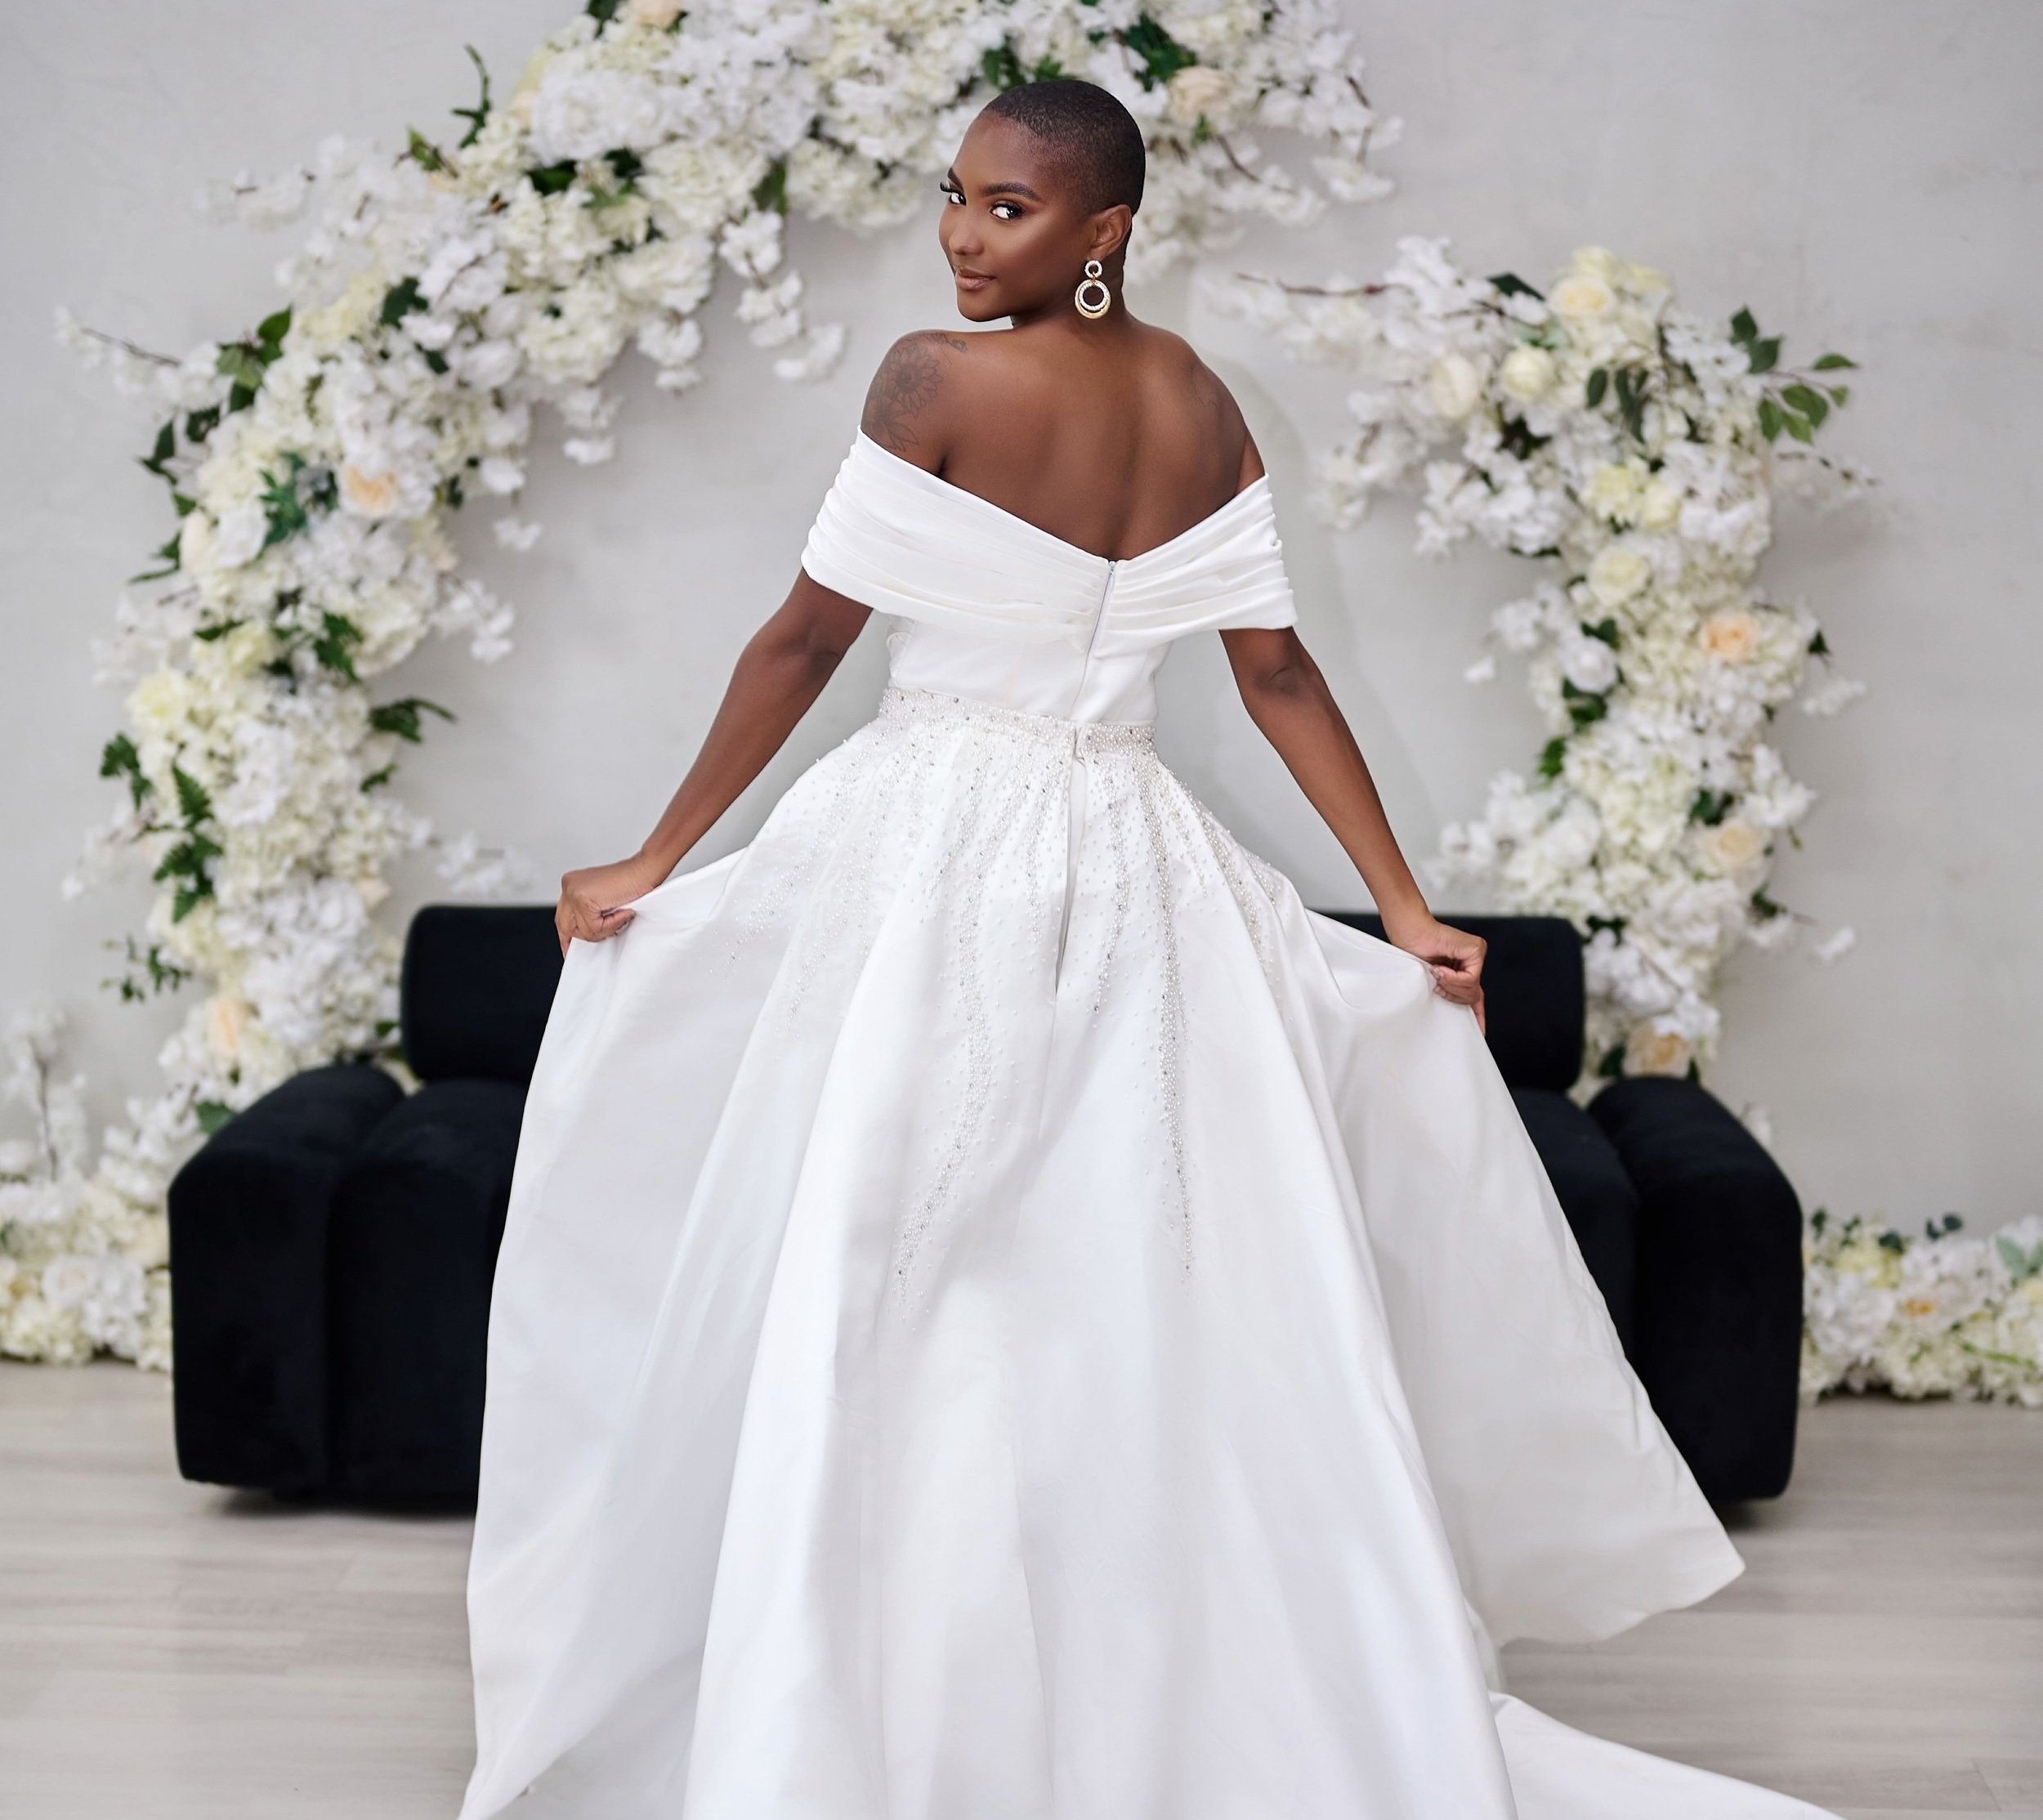 The 10 Best Wedding Dresses in Dallas - WeddingWire